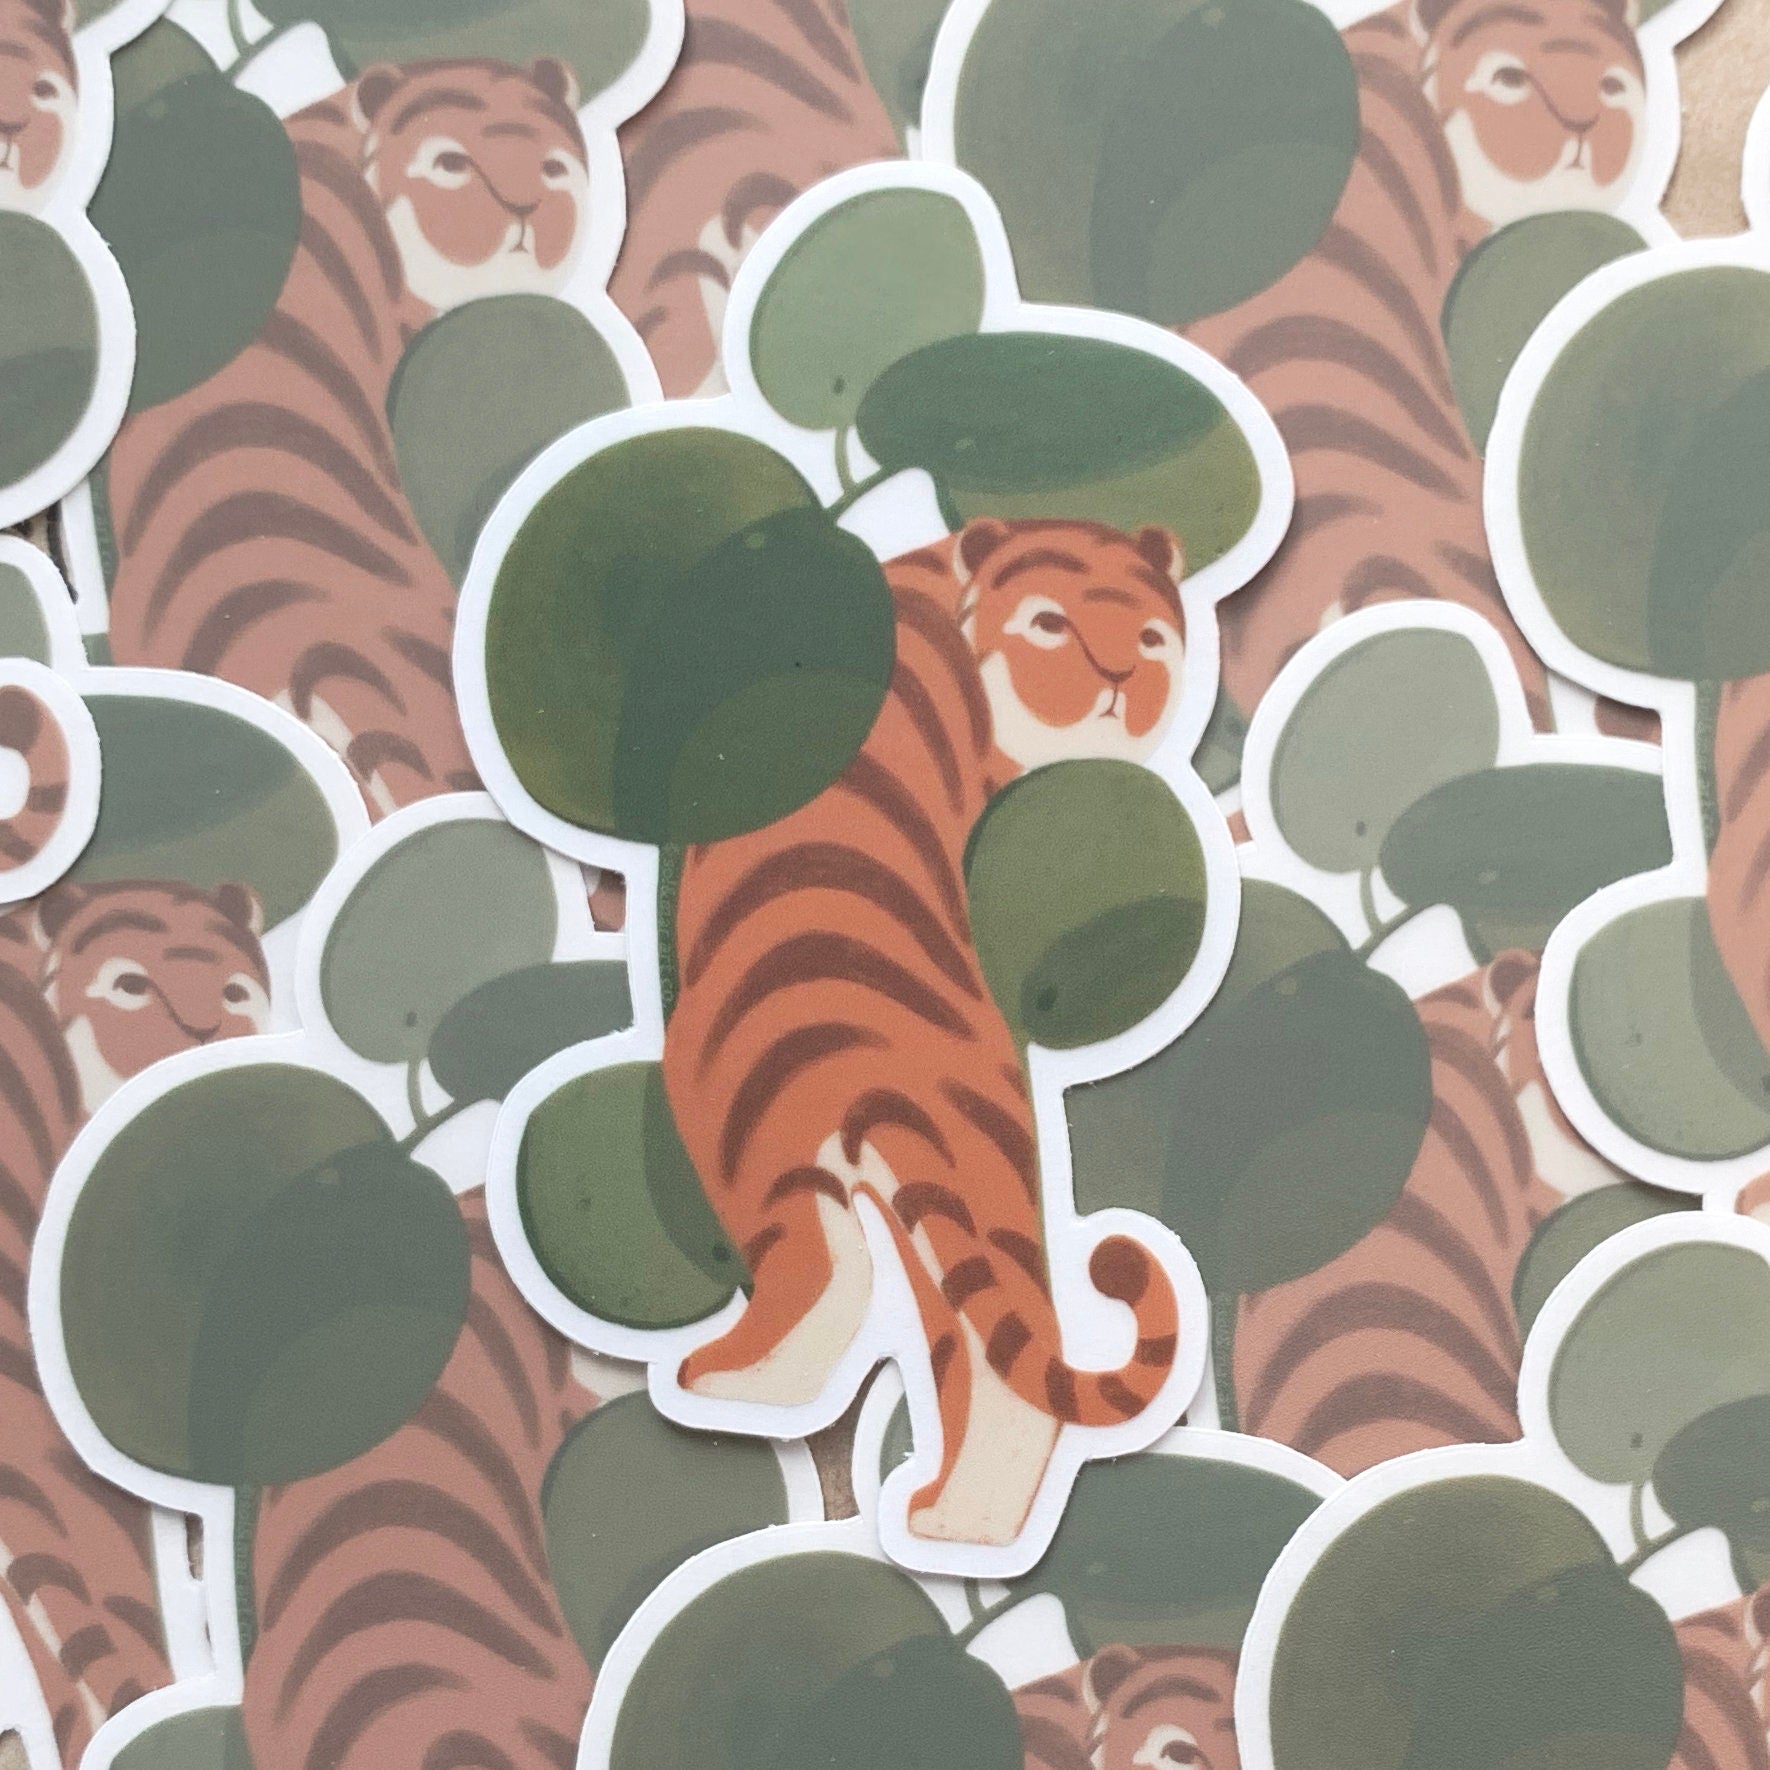 Tiger Sticker 03